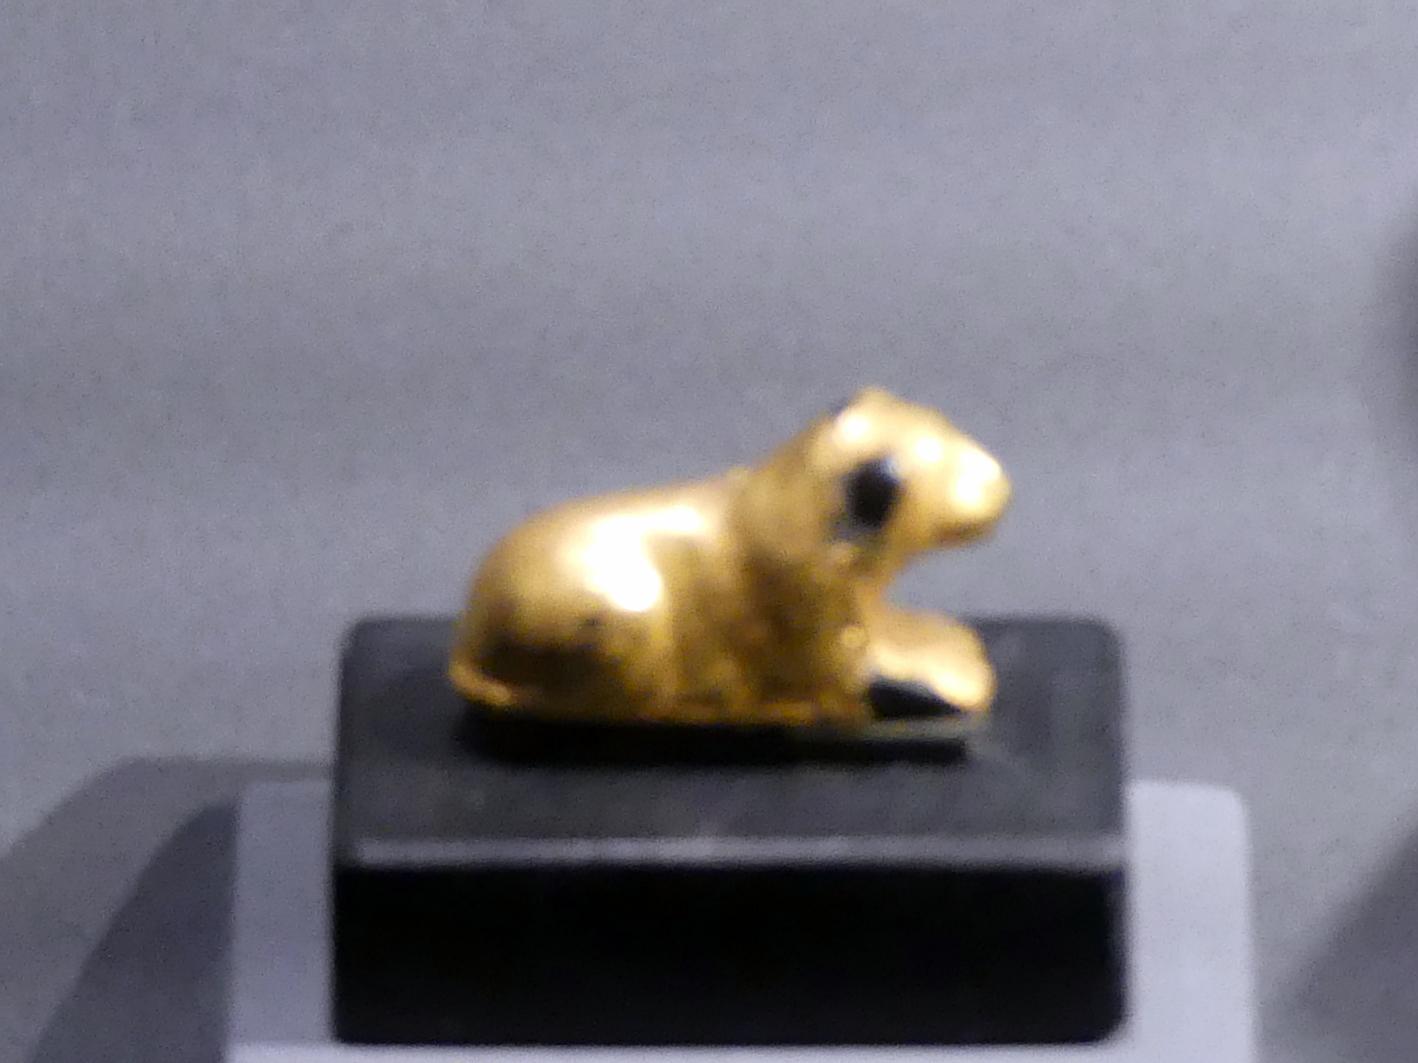 Liegender Löwe, 18. Dynastie, 1210 - 966 v. Chr., 1450 v. Chr.